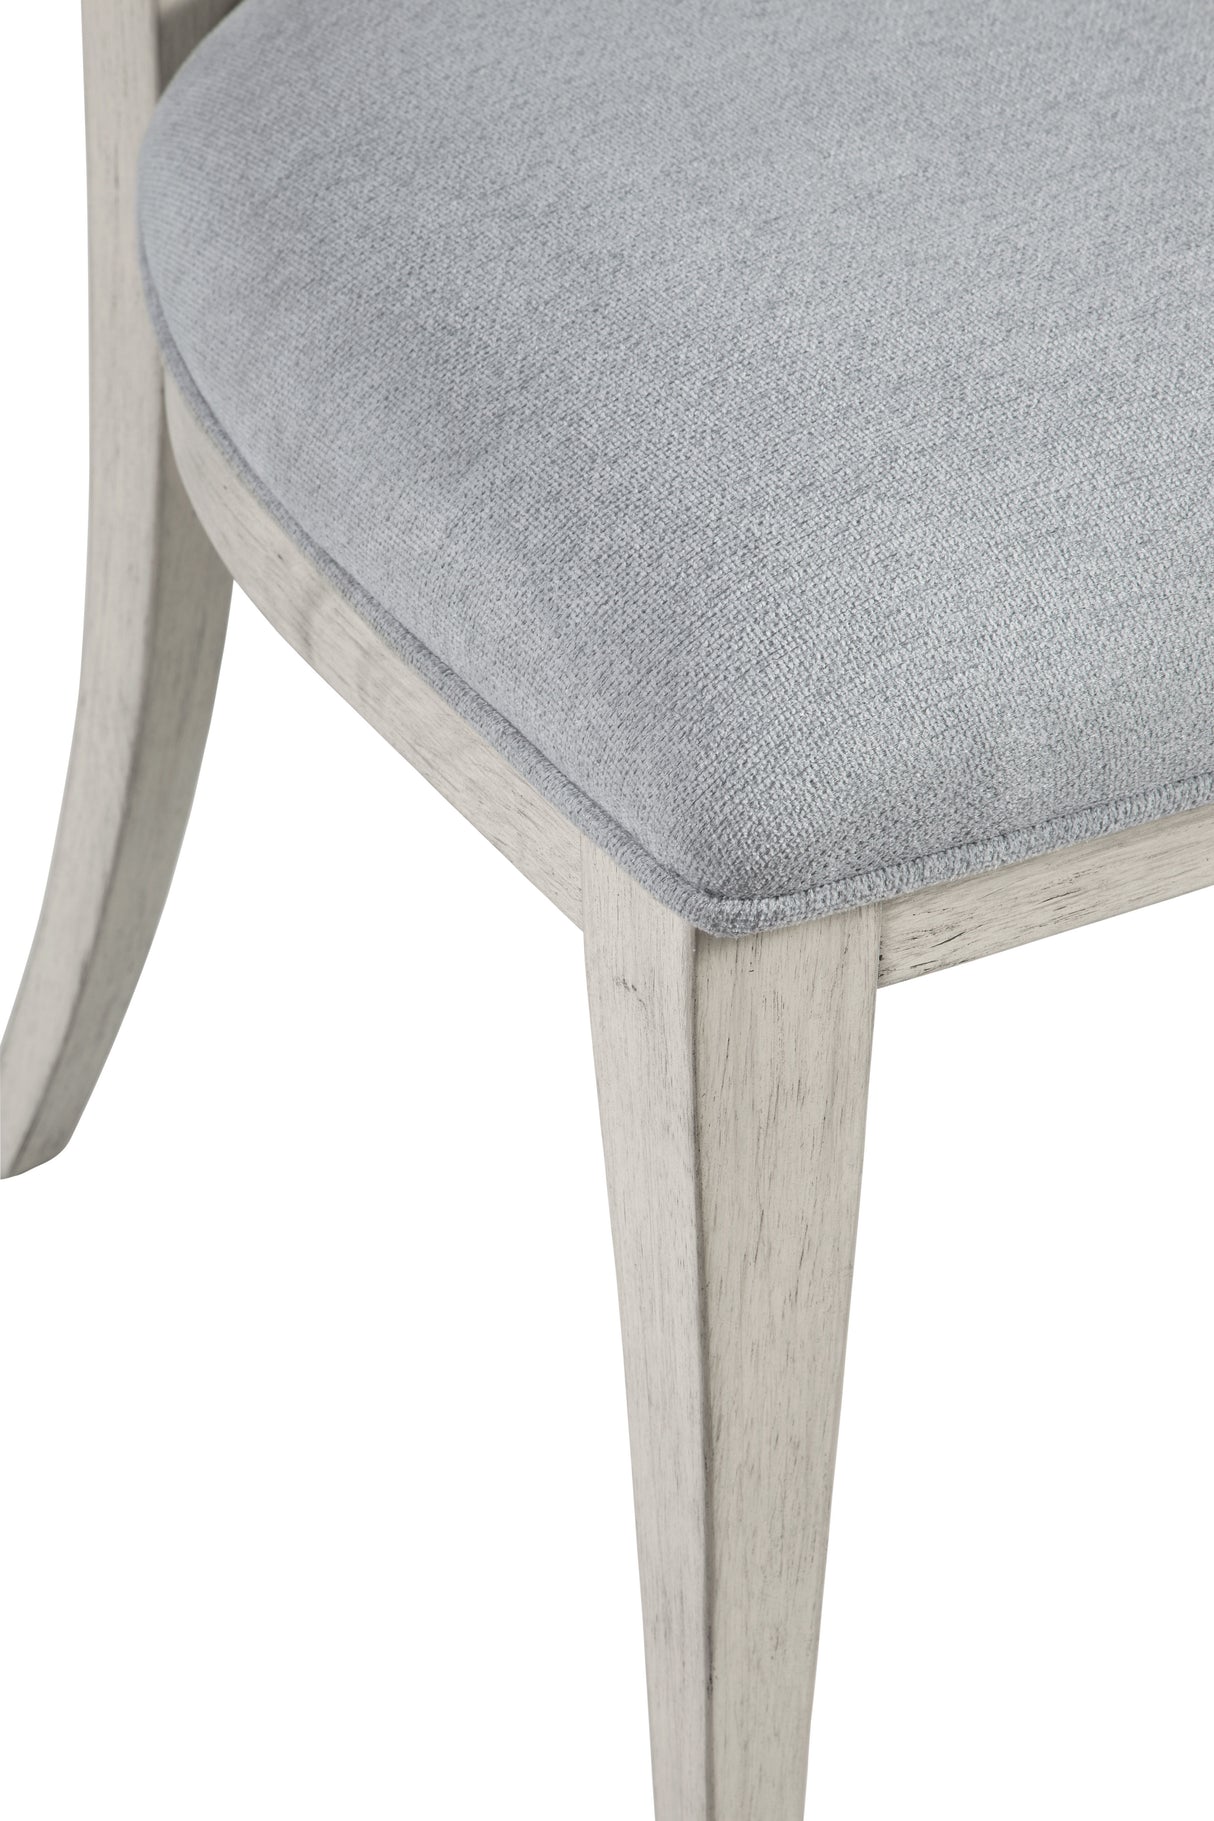 Maxine - Side Chair - Silver